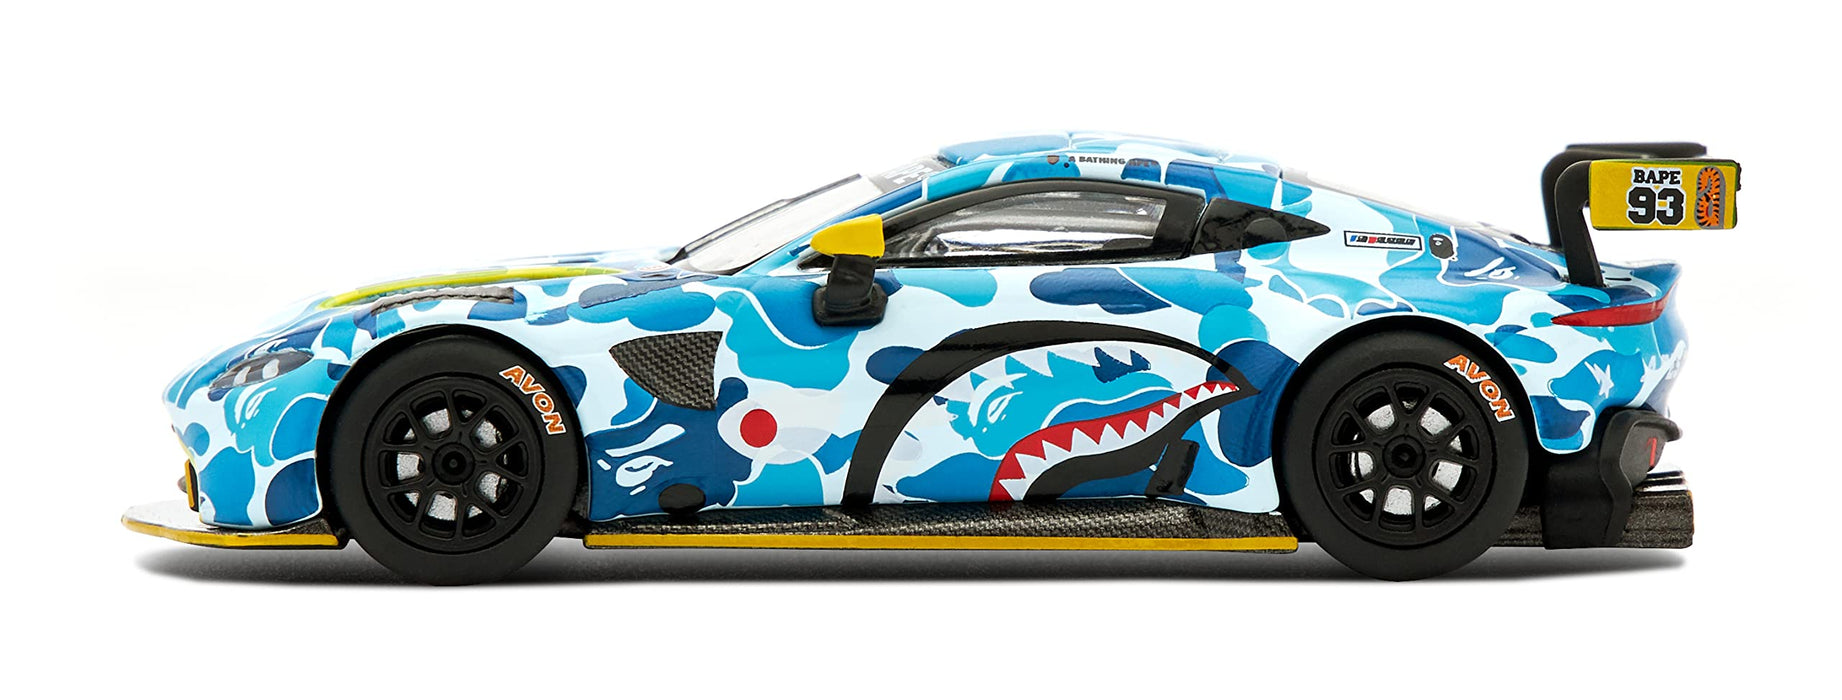 Genesis Company Pop Race 1/64 Bape X Aston Martin Gt3 Blue Japan